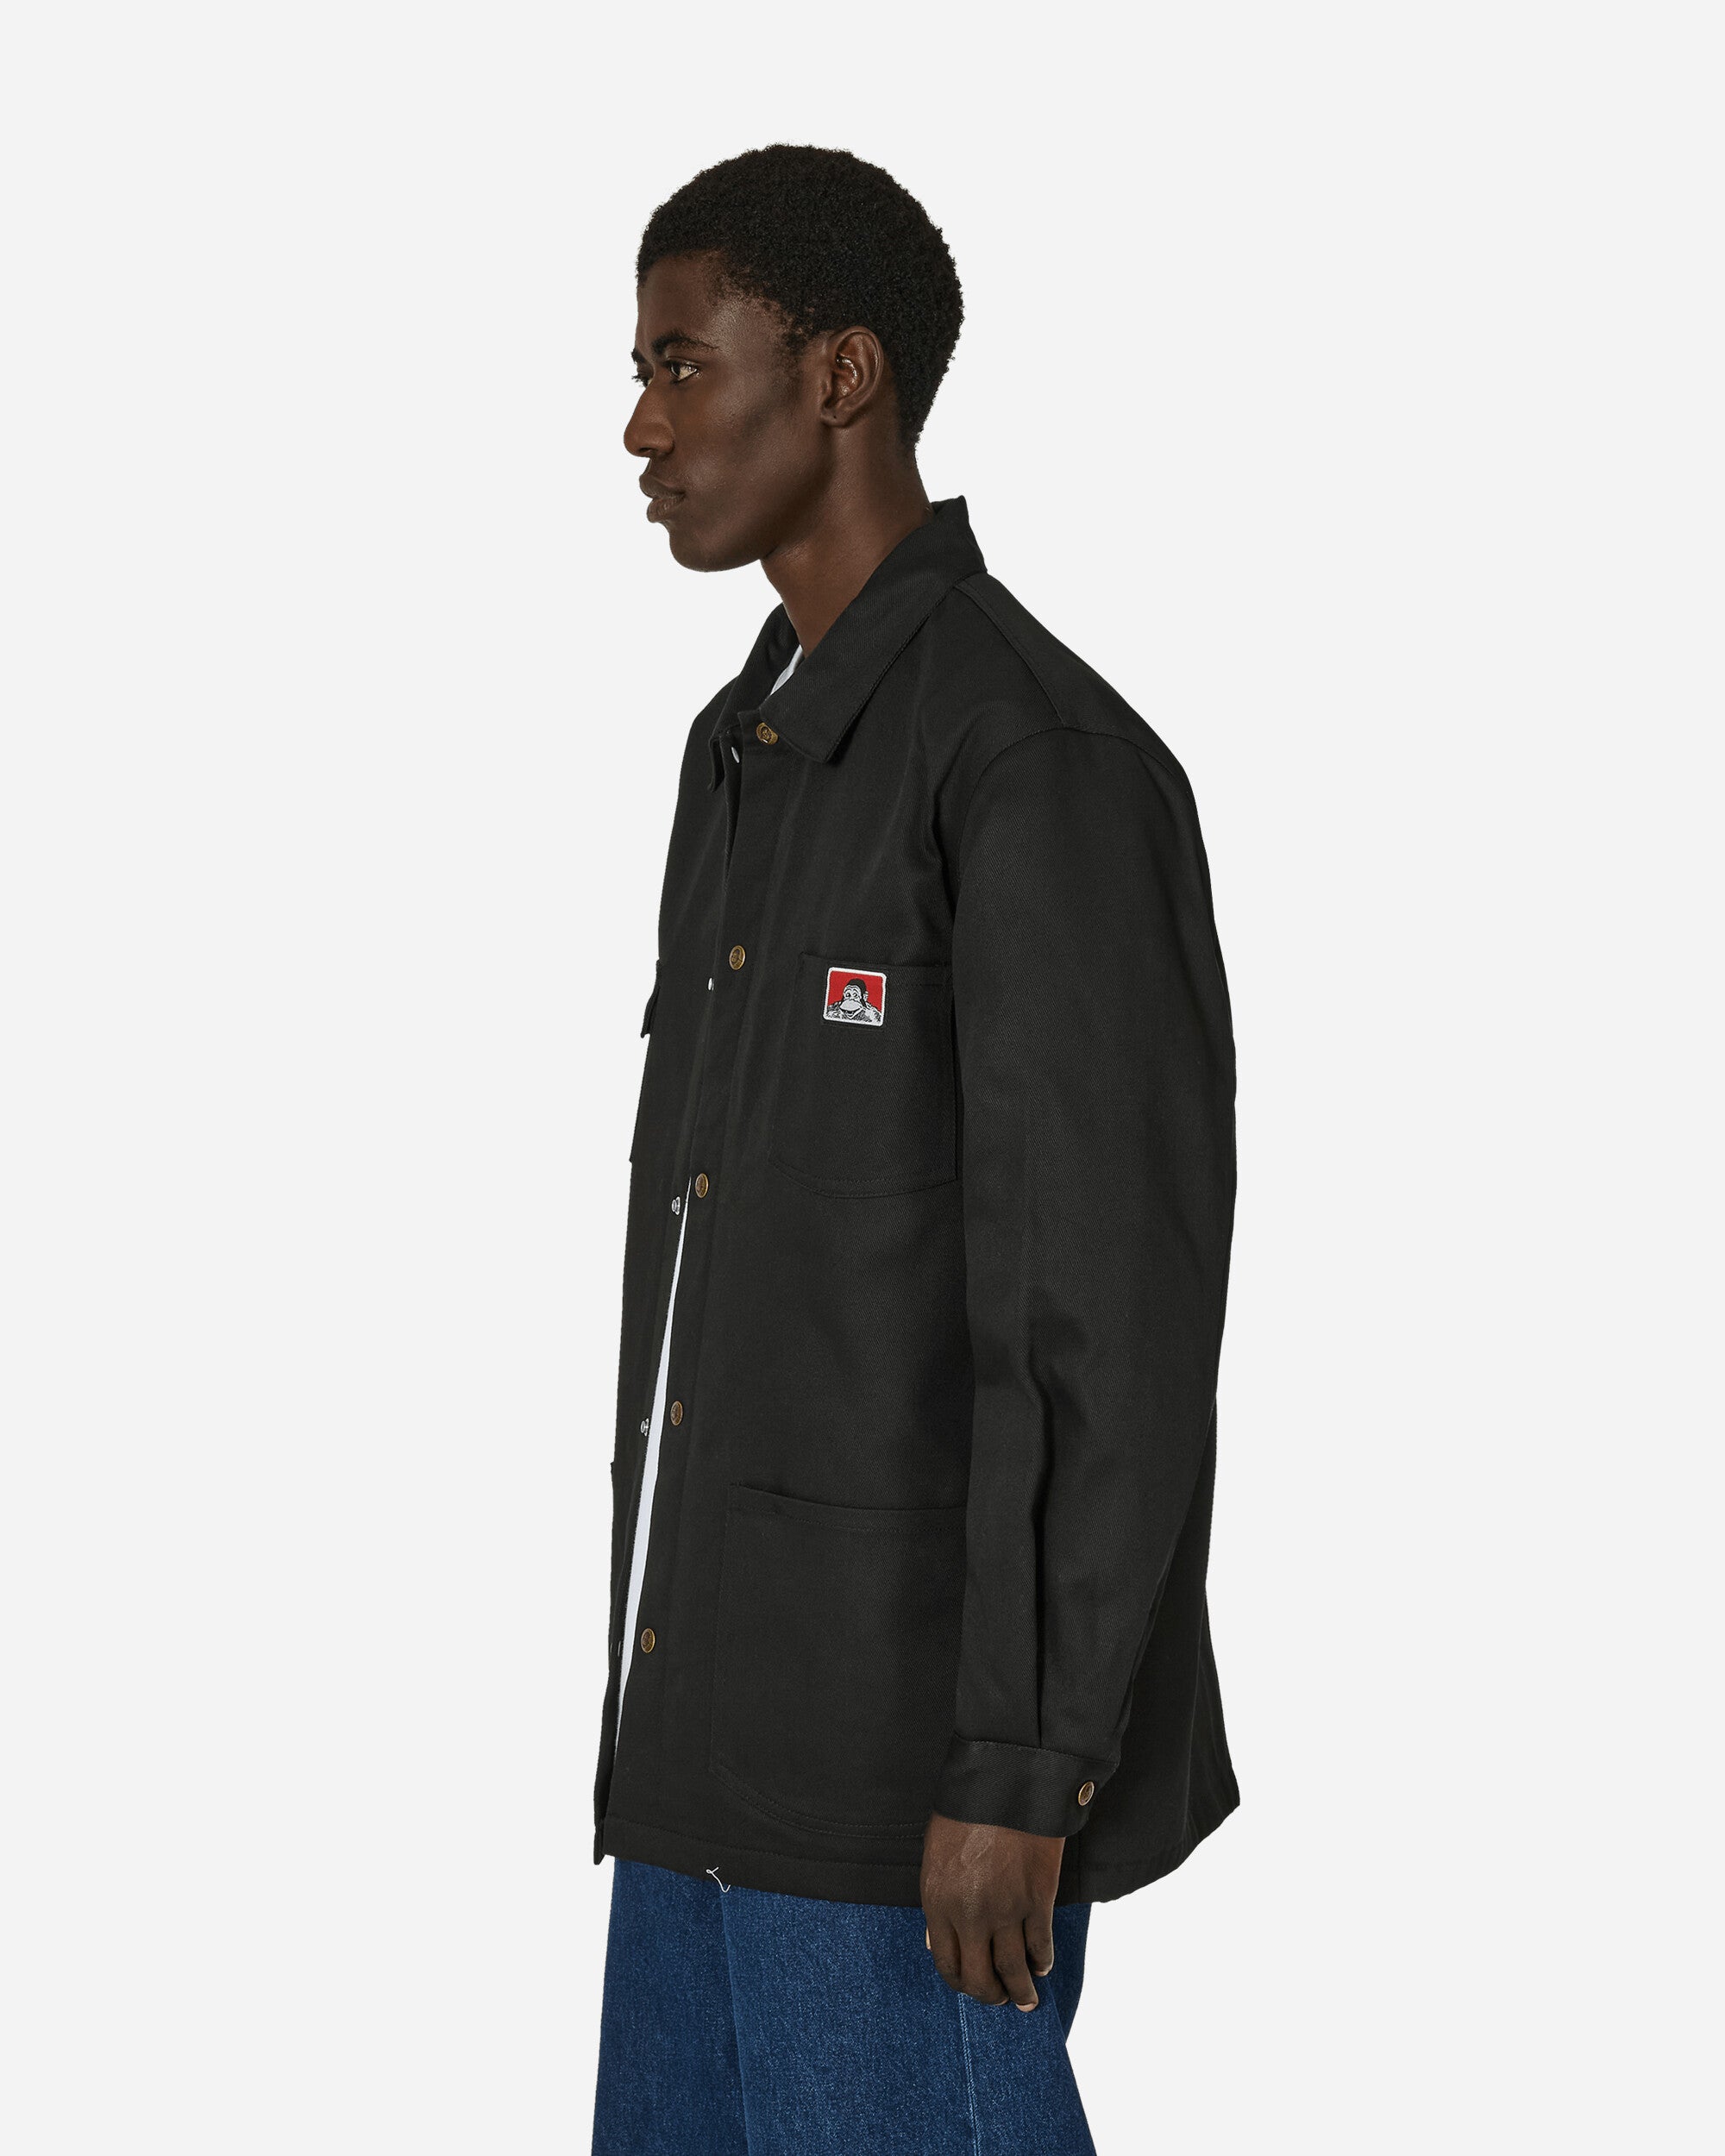 Ben Davis Original Style Jacket Black Coats and Jackets Jackets BEN394 001